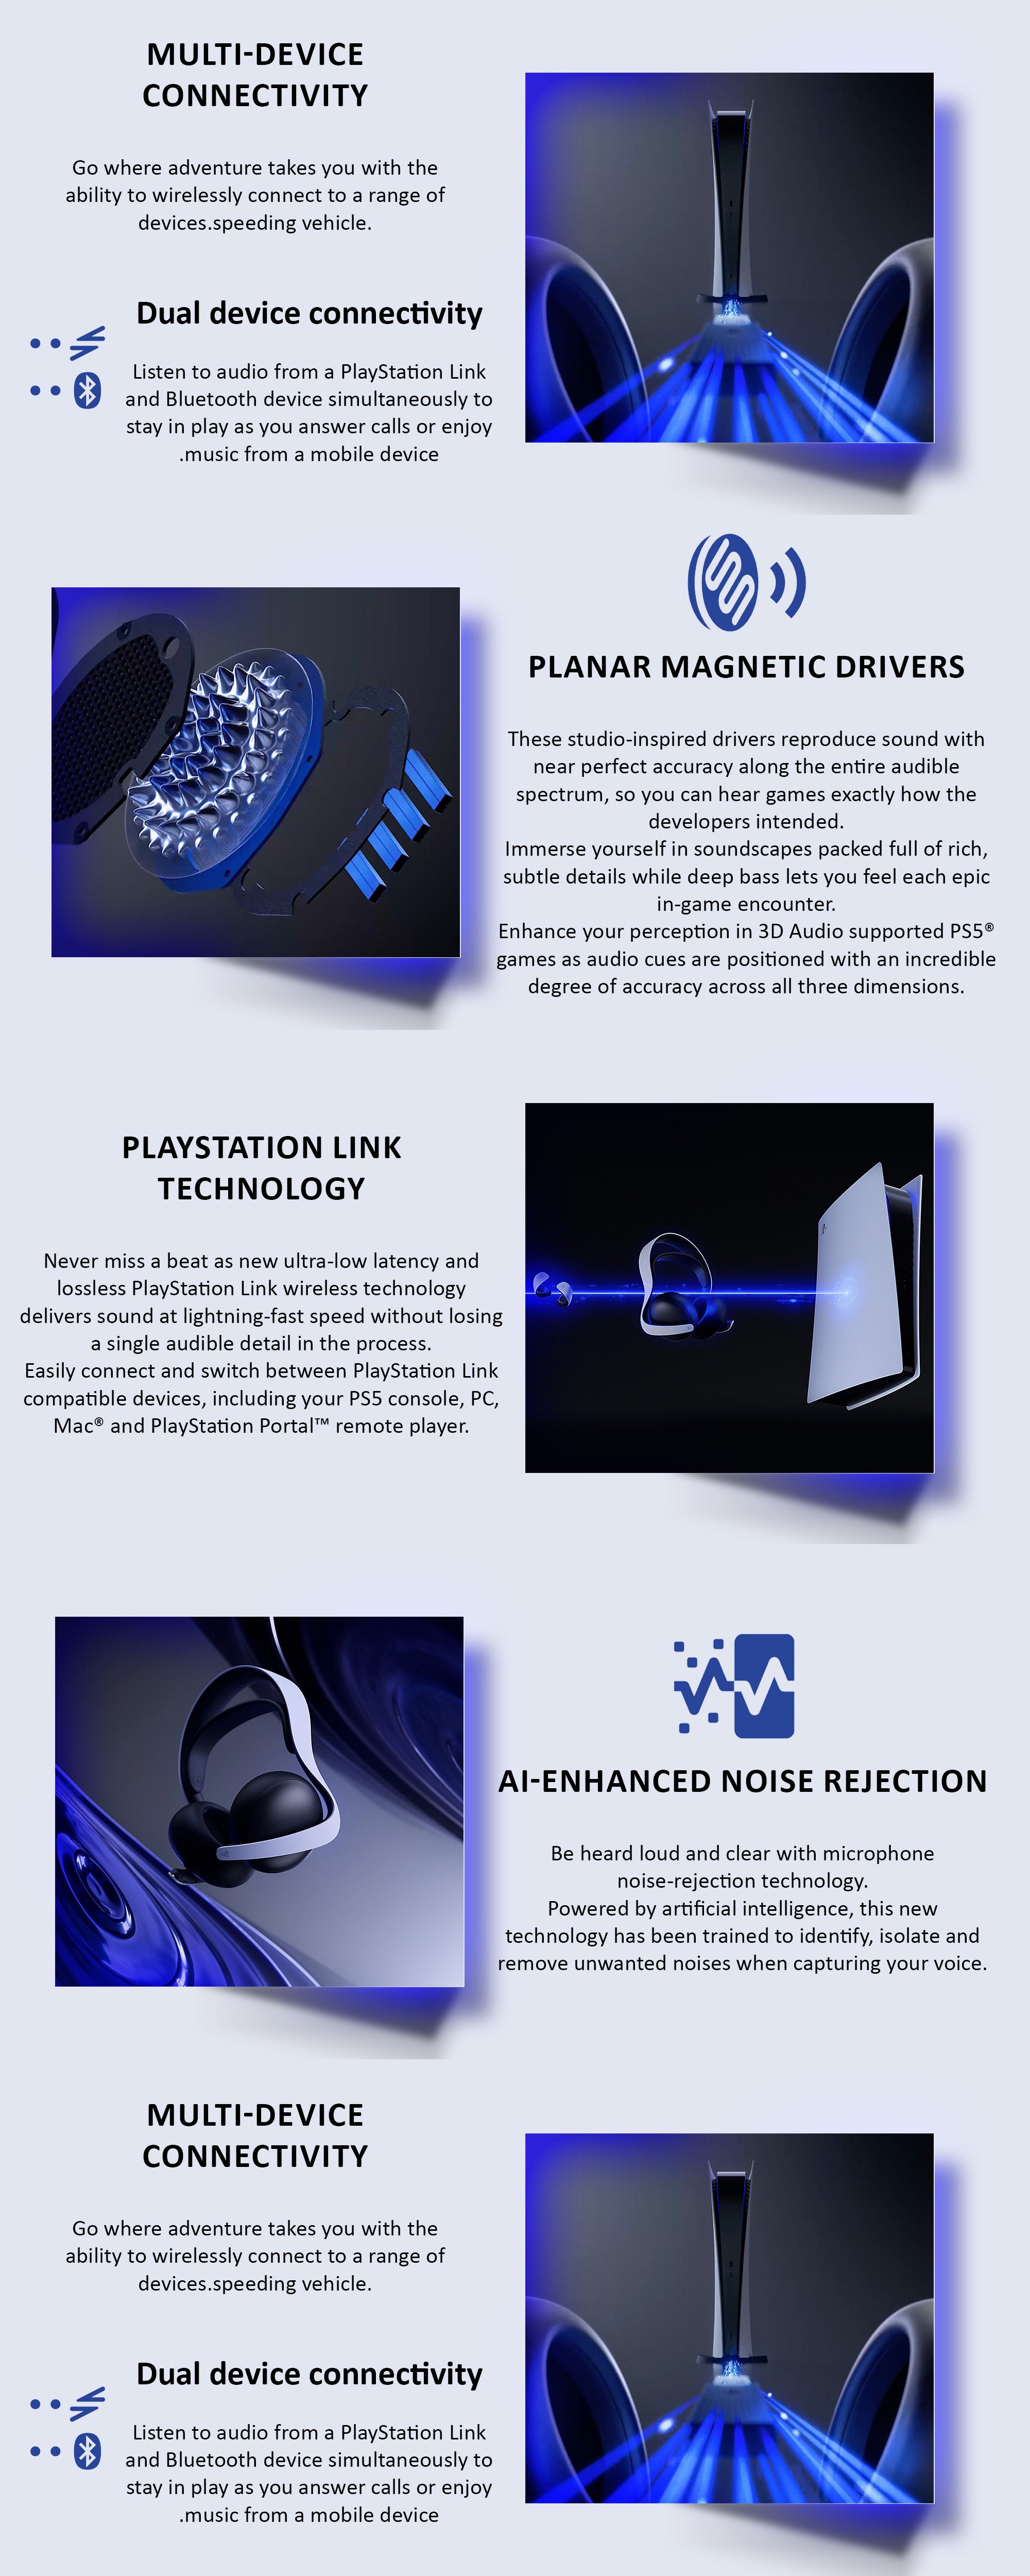 PlayStation Pulse Elite Wireless Headset - UAE Version